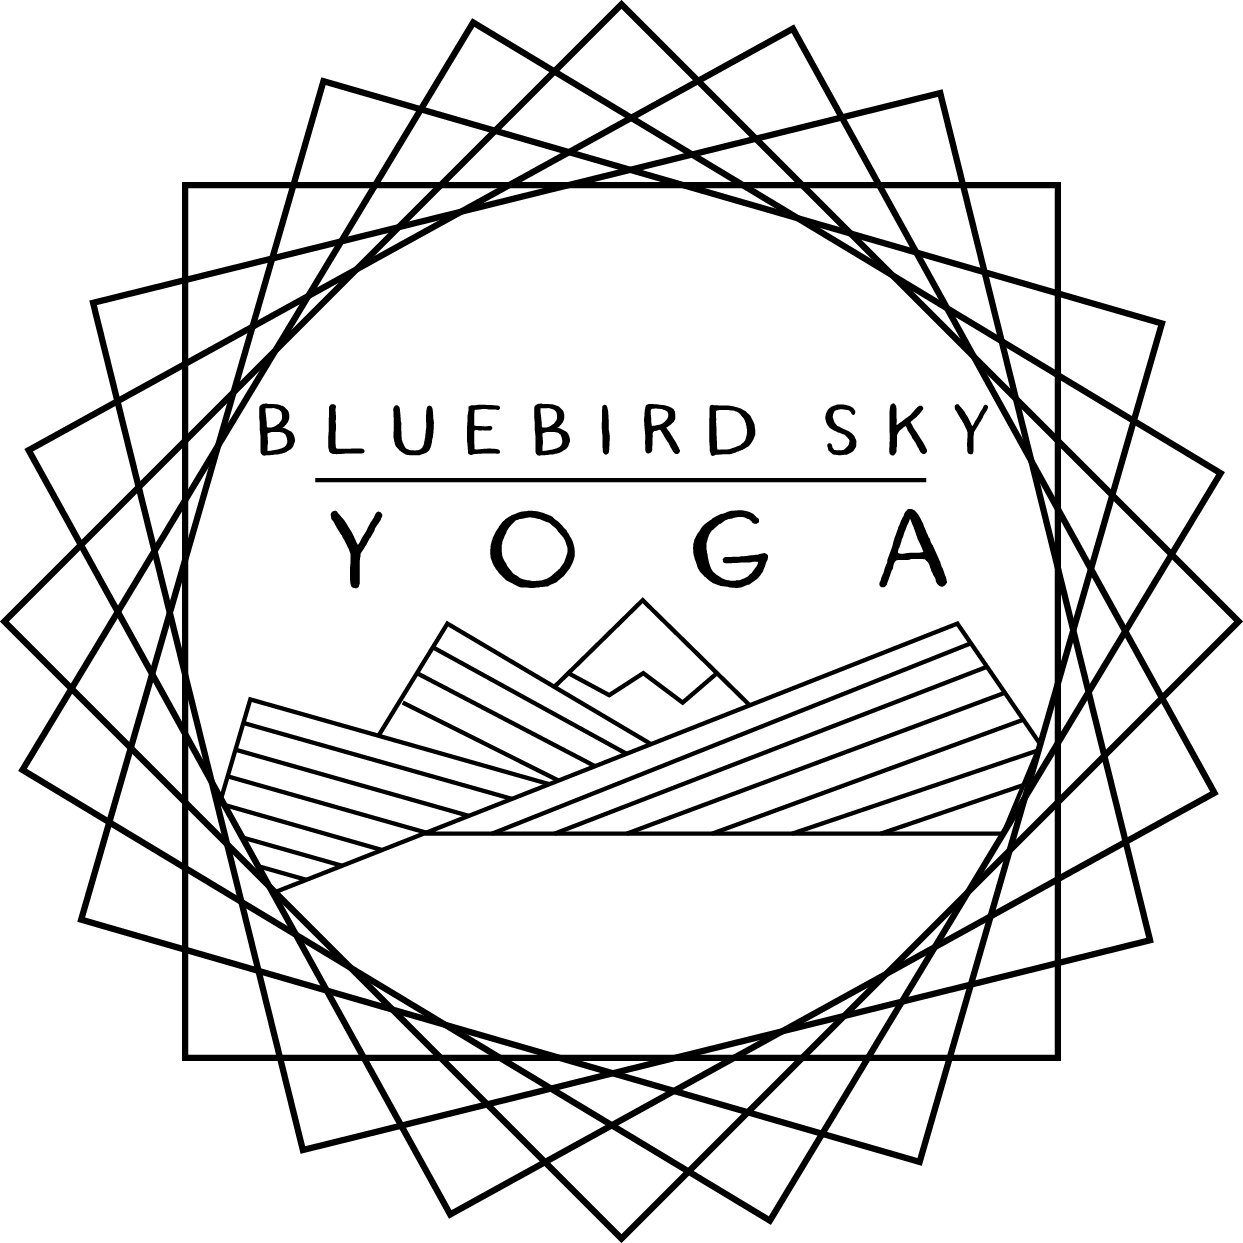 Brookland-based community yoga studio and art gallery | https://t.co/aJueJqyzjU